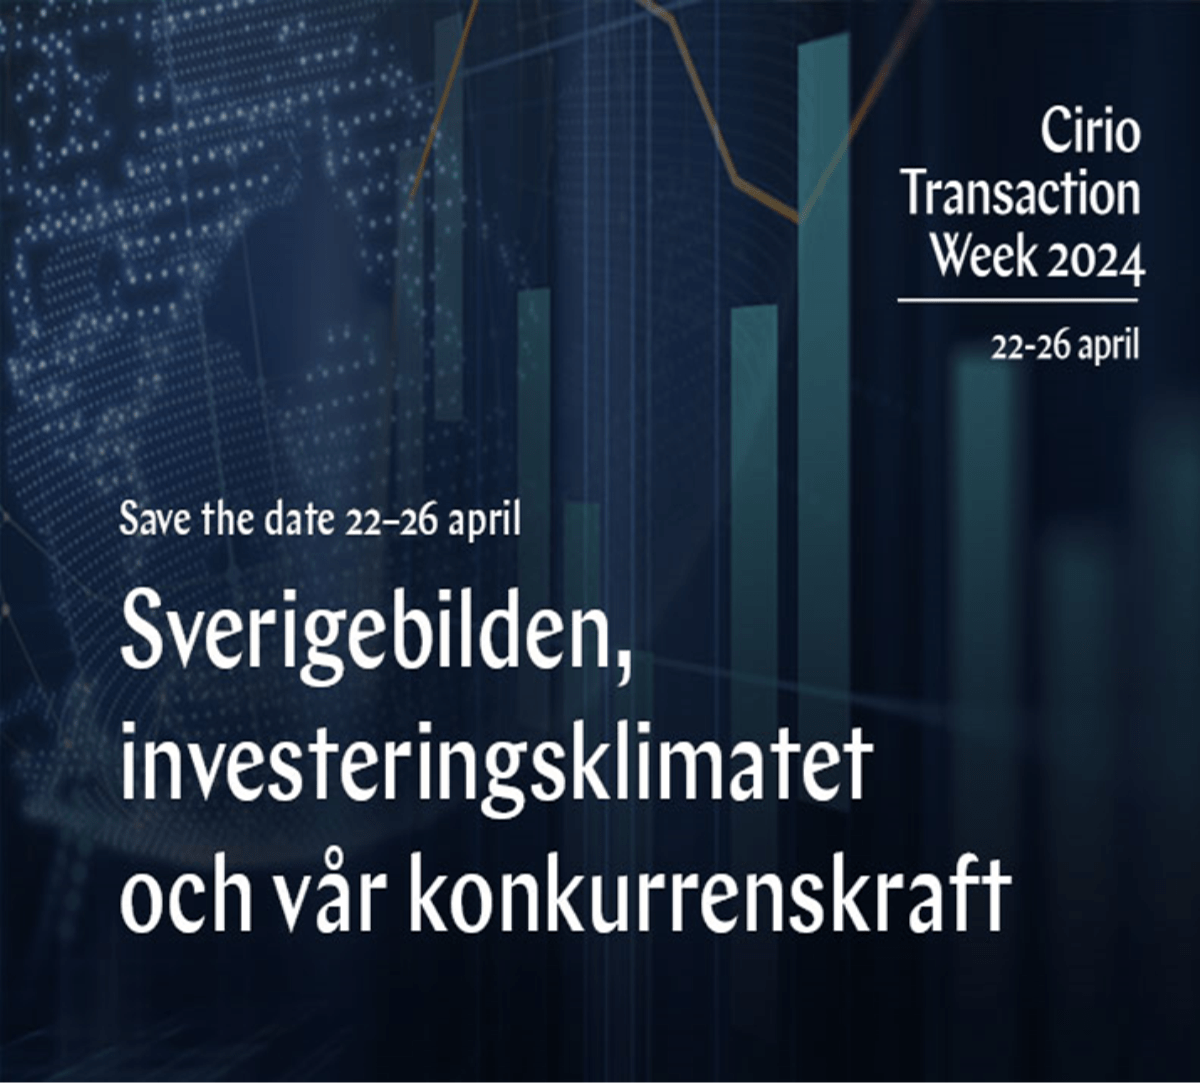 Save the date: Cirio Transaction Week 22-26 april